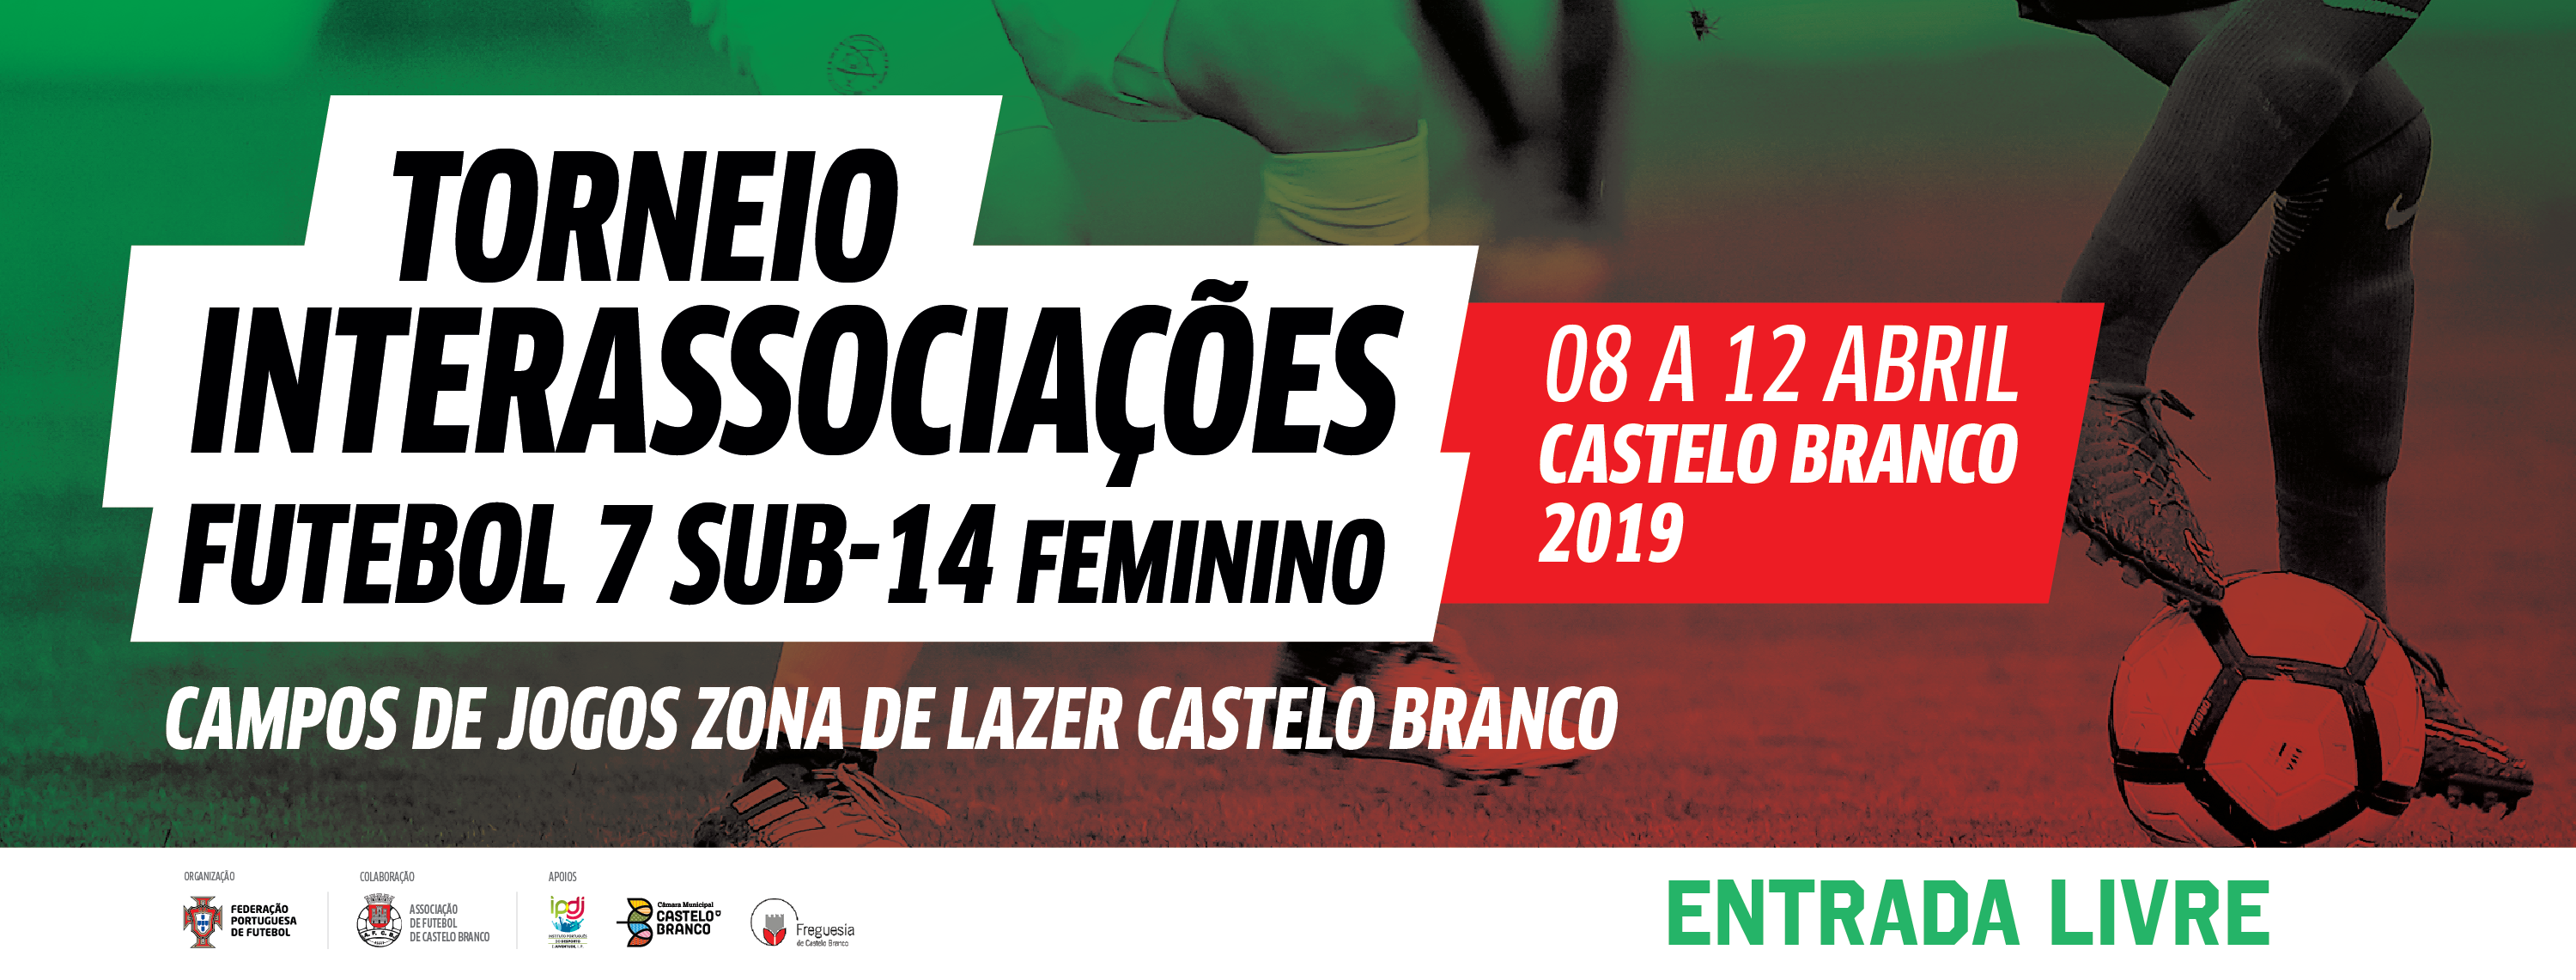 Torneio Interassociaçoes Futebol 7 Sub/14 Feminina